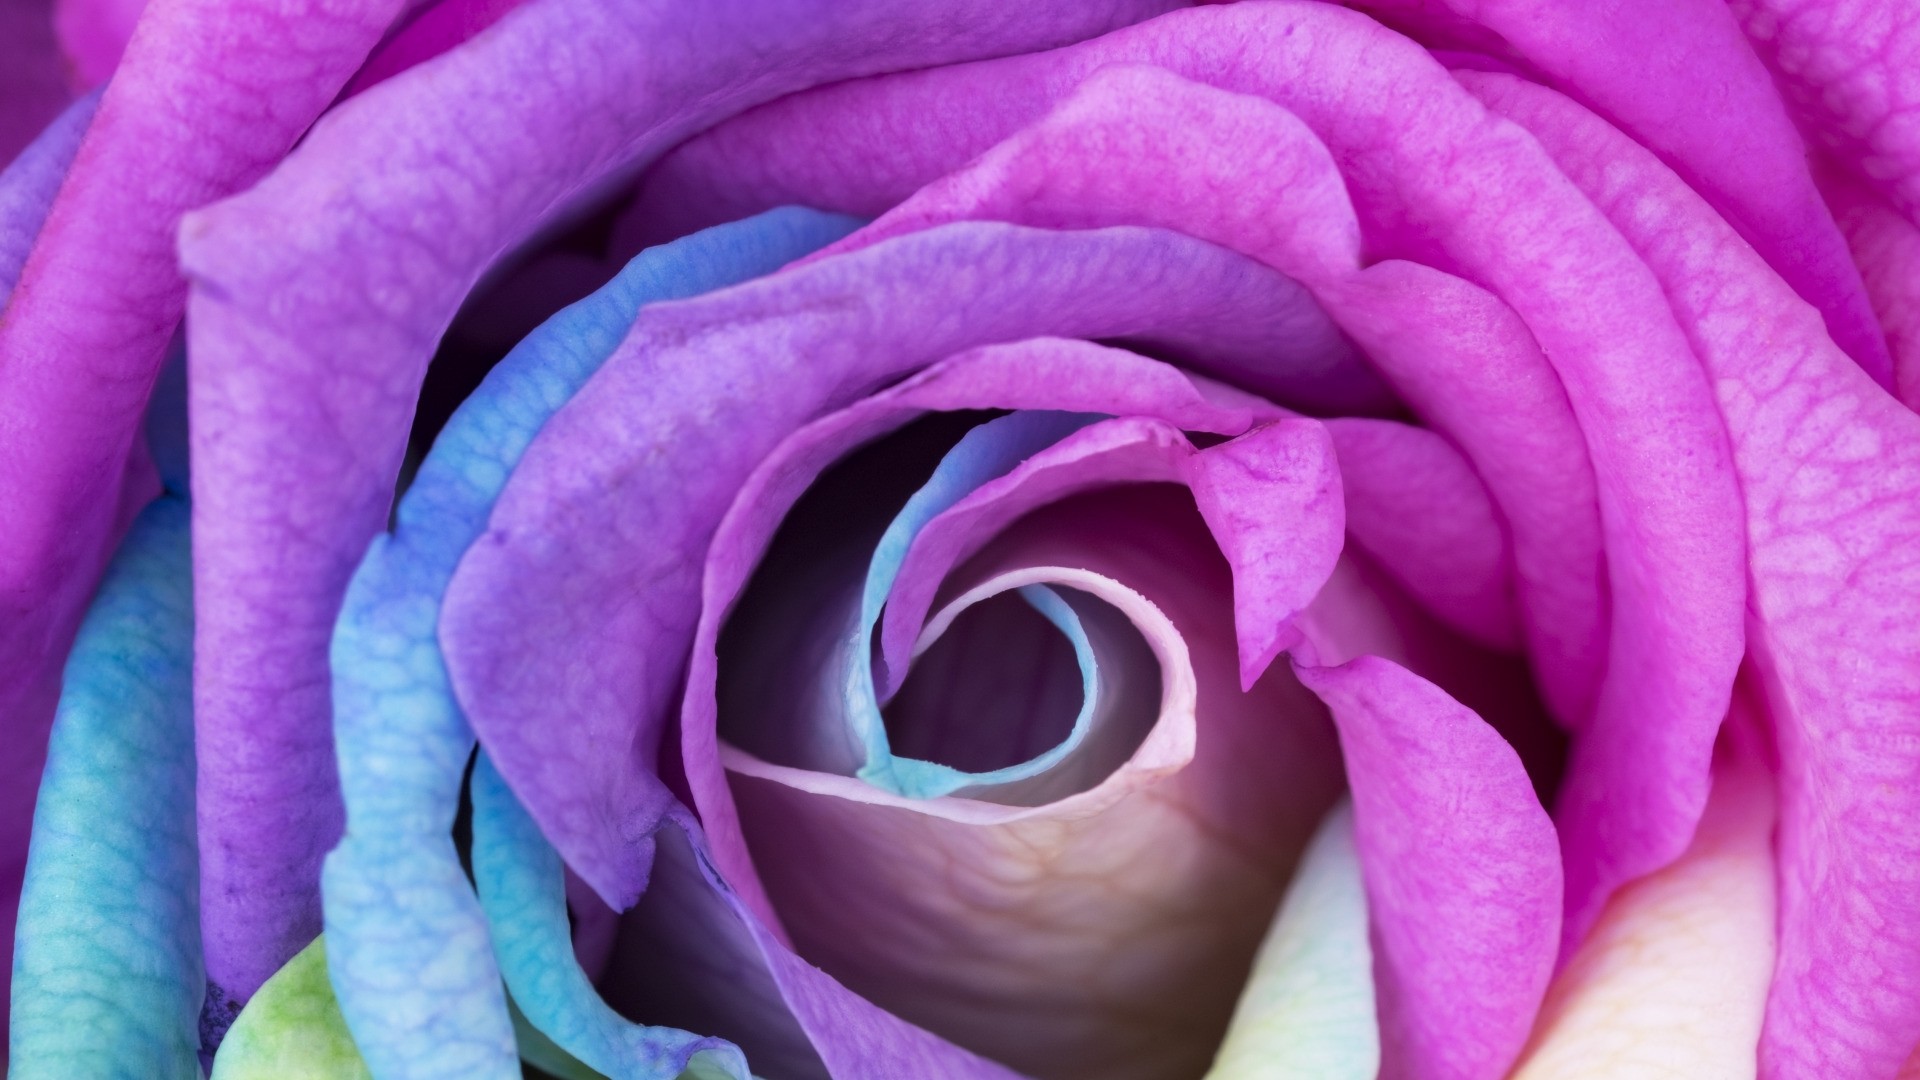 Rainbow Rose High Quality